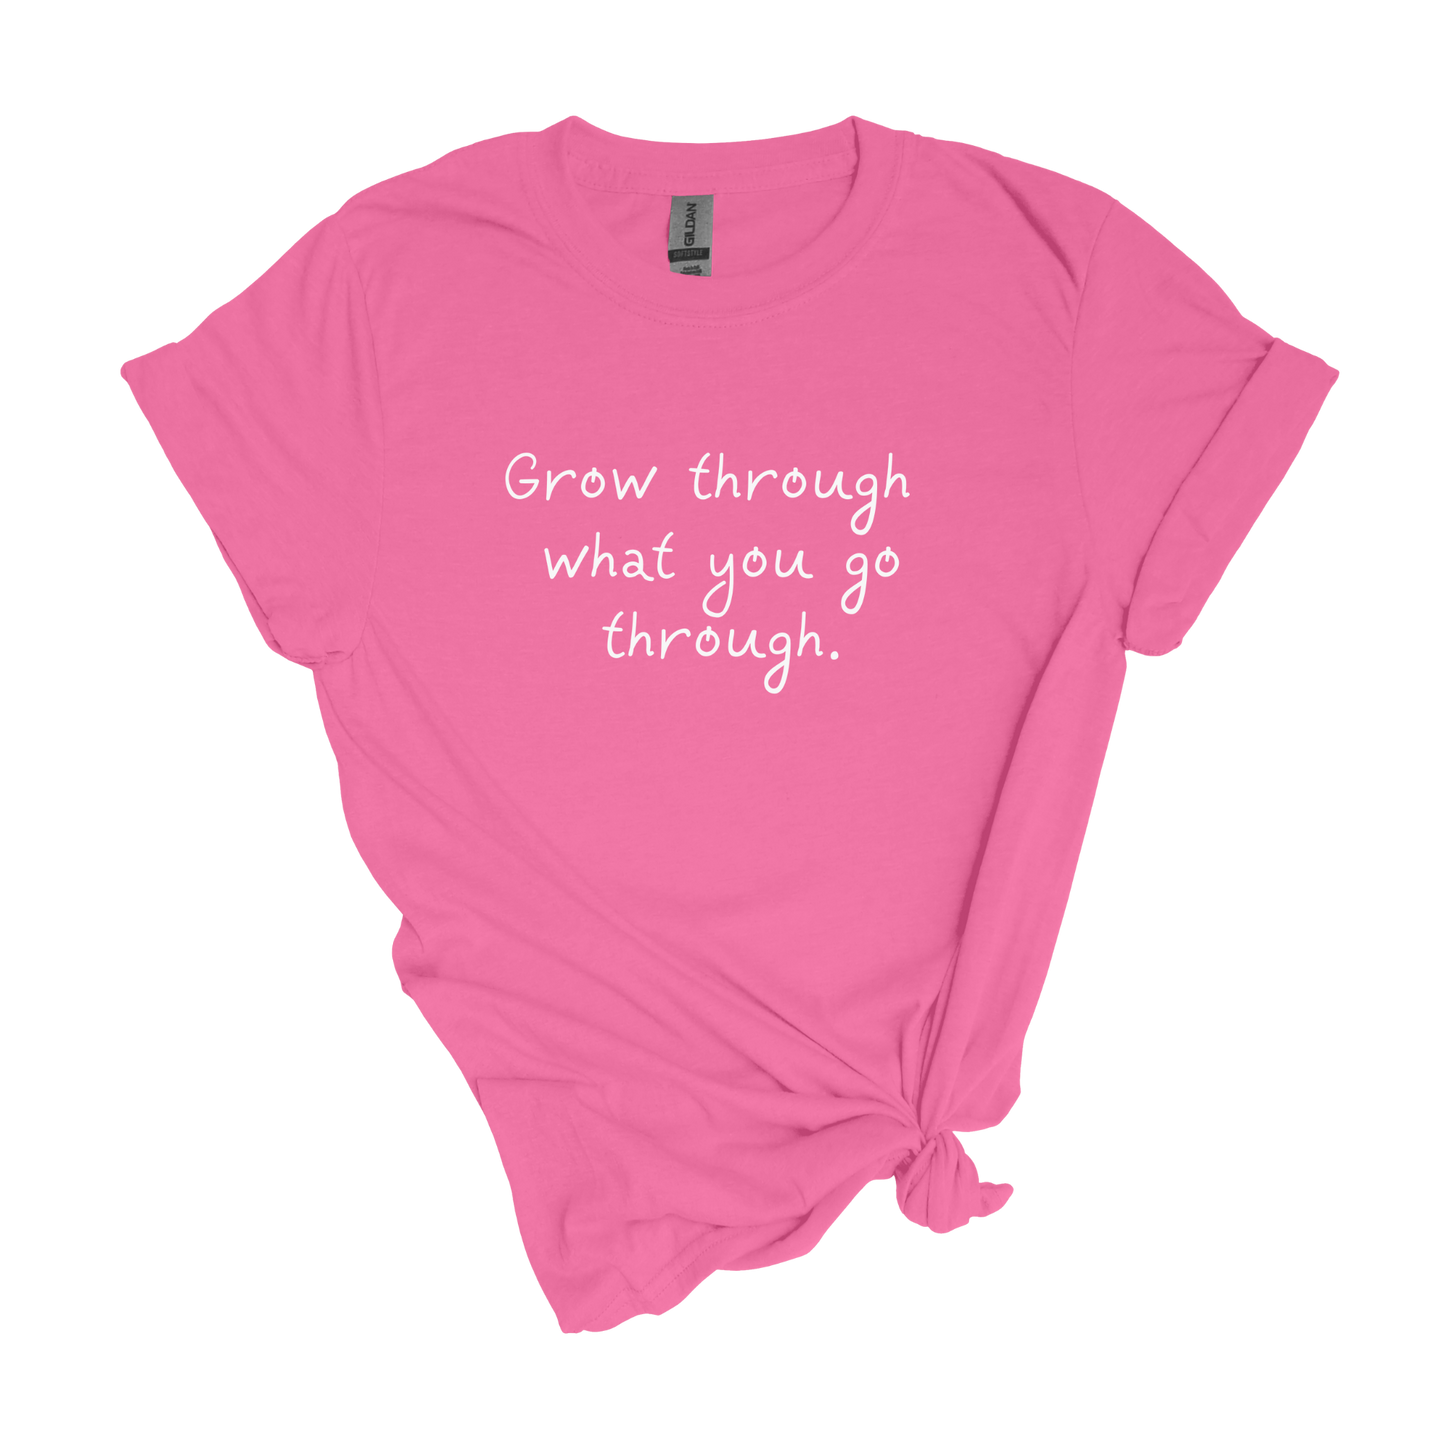 Grow through what you go through - Adult Unisex Soft Inspirational T-shirt